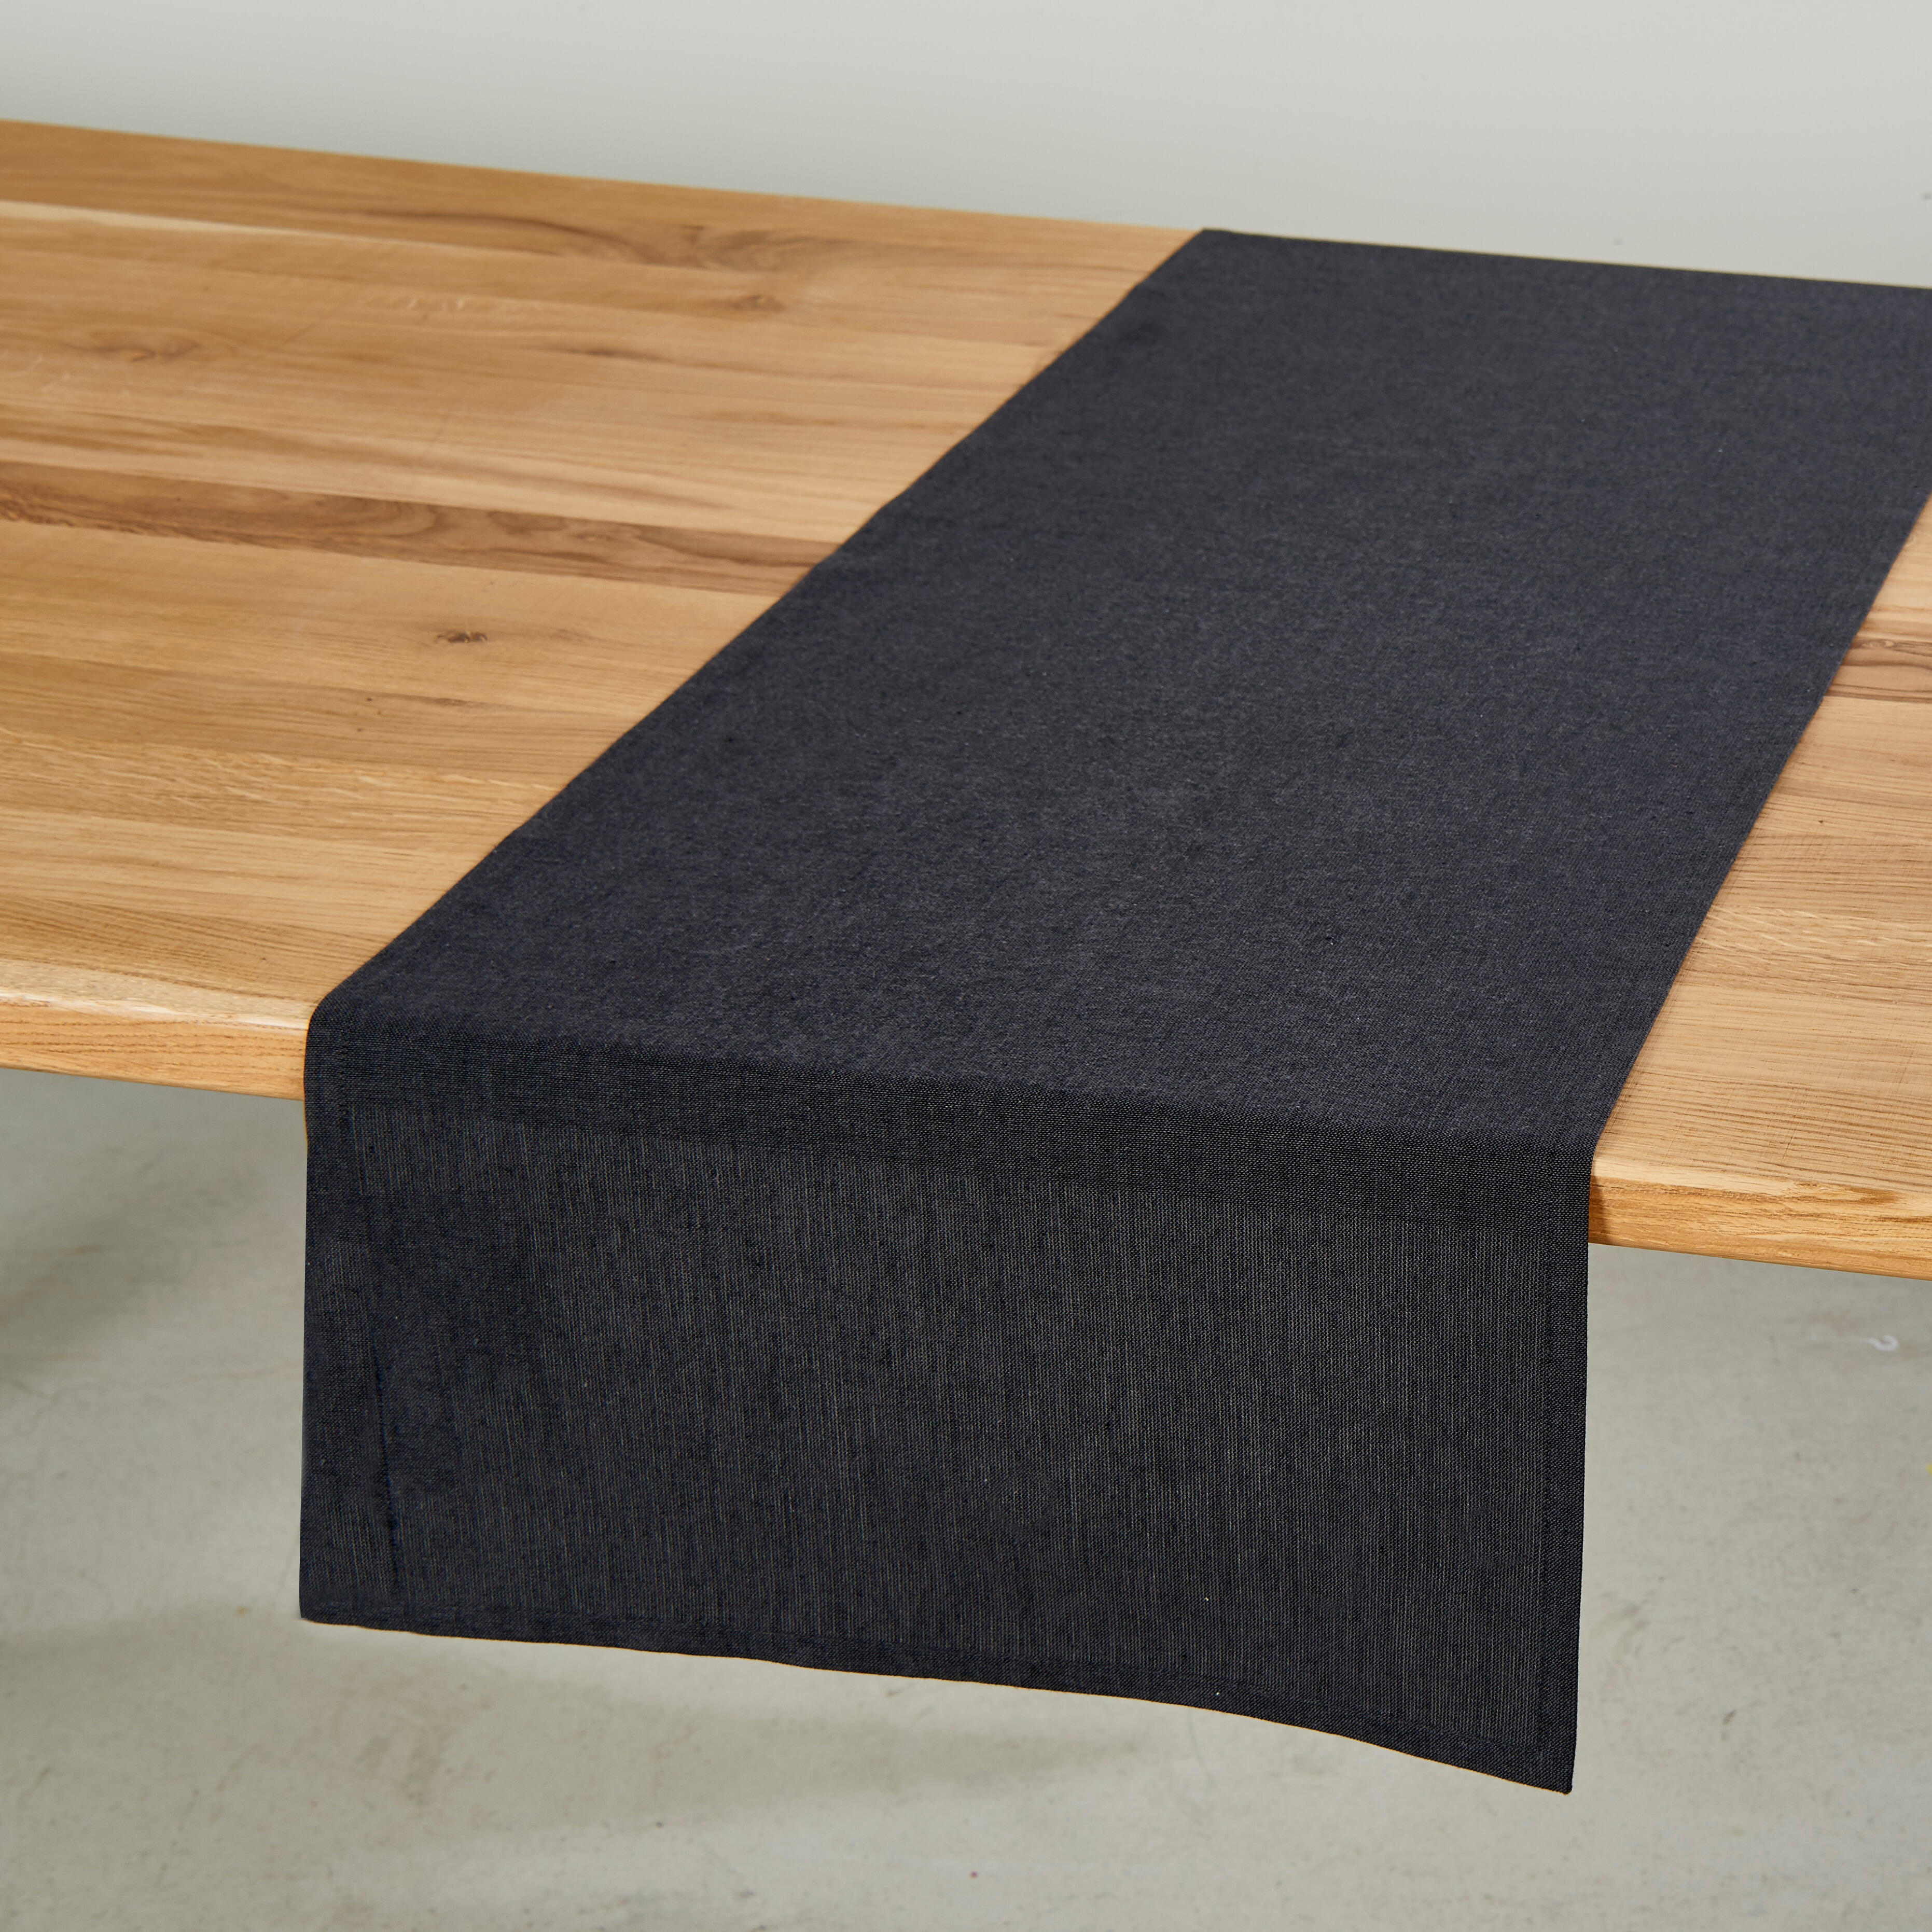 Chemin de table intissé noir 29 cm x 10 m - Vegaooparty